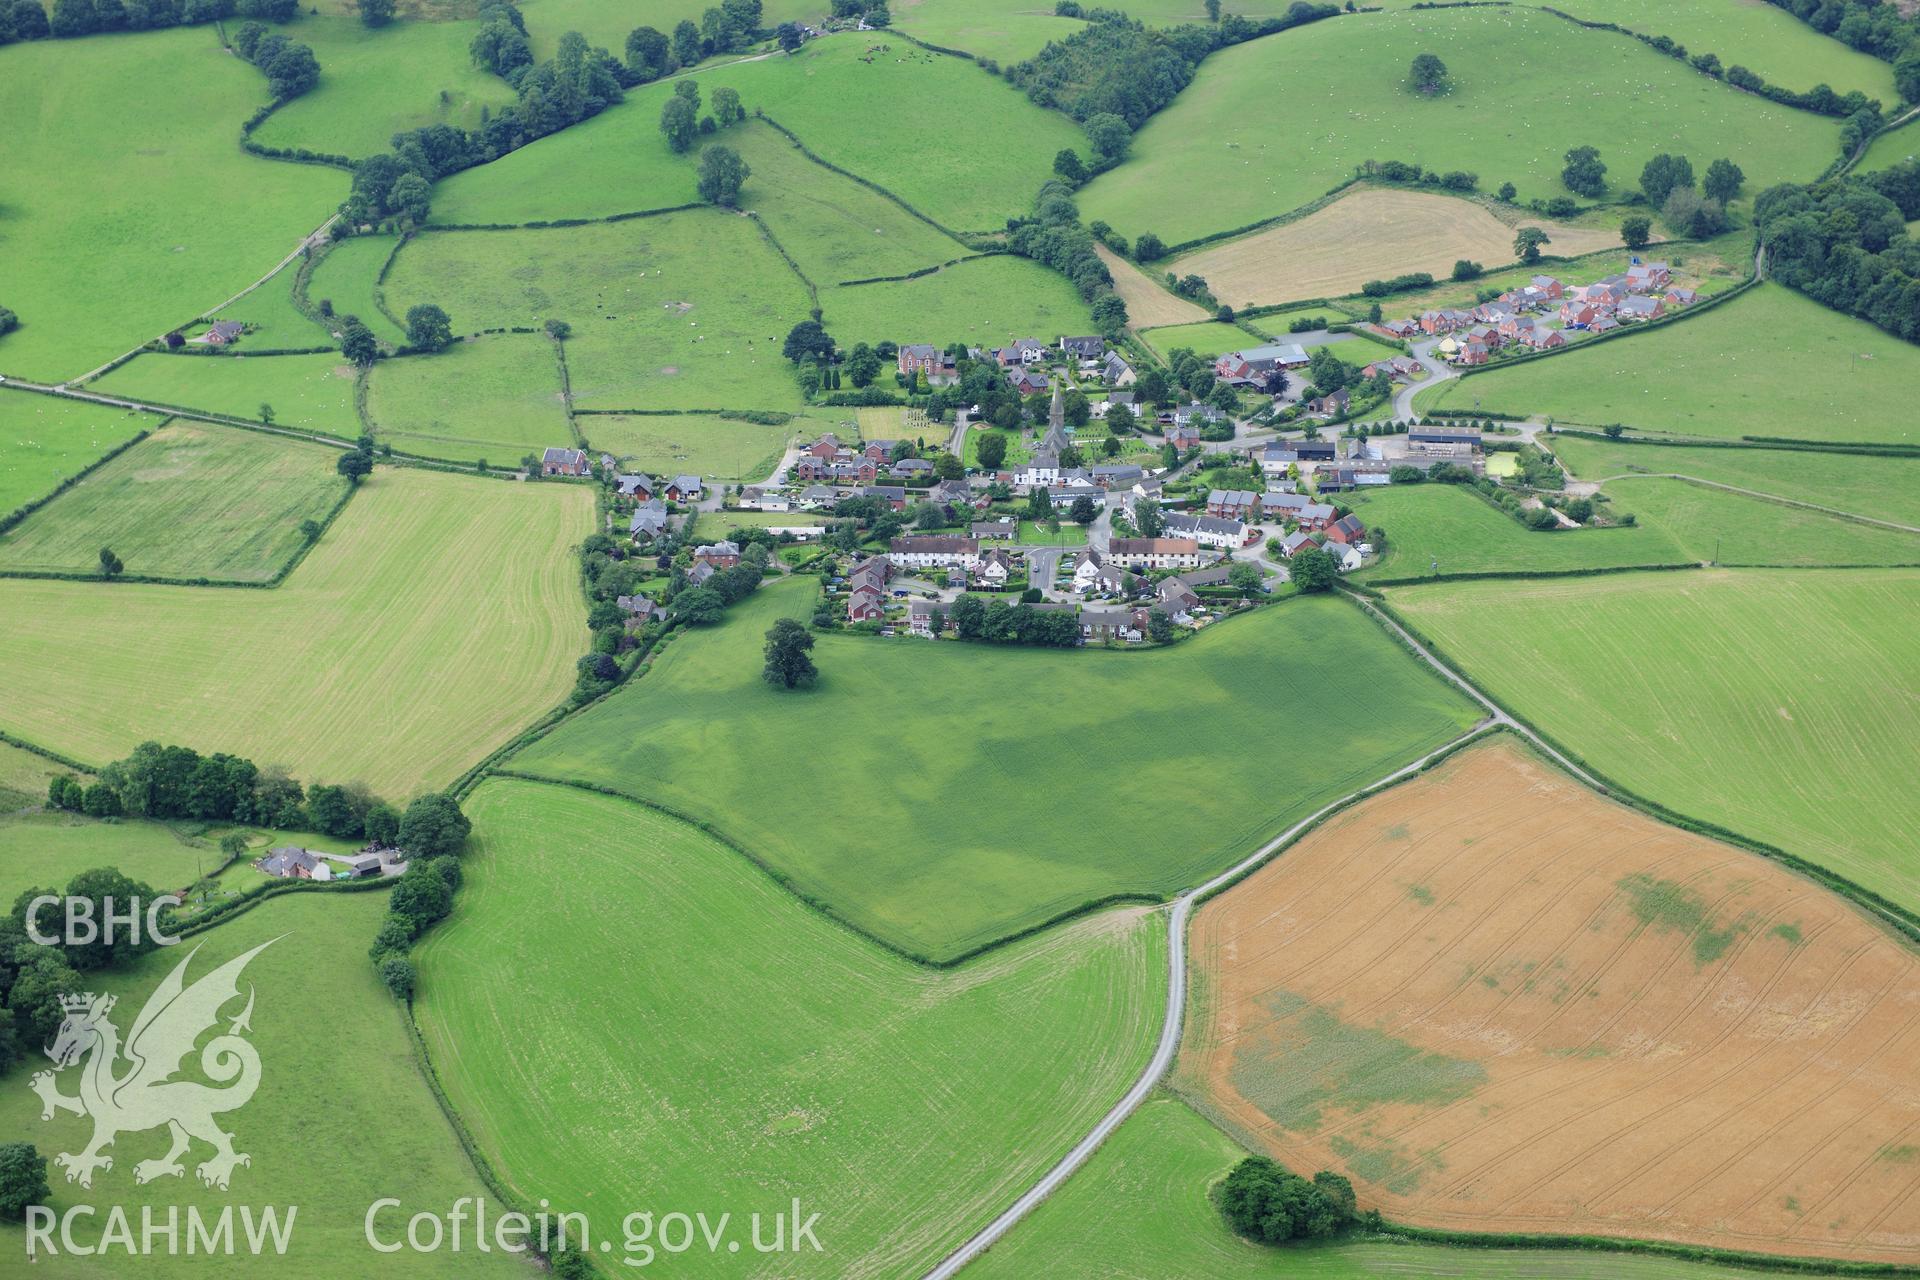 RCAHMW colour oblique photograph of Castle Caereinion village. Taken by Toby Driver on 27/07/2012.